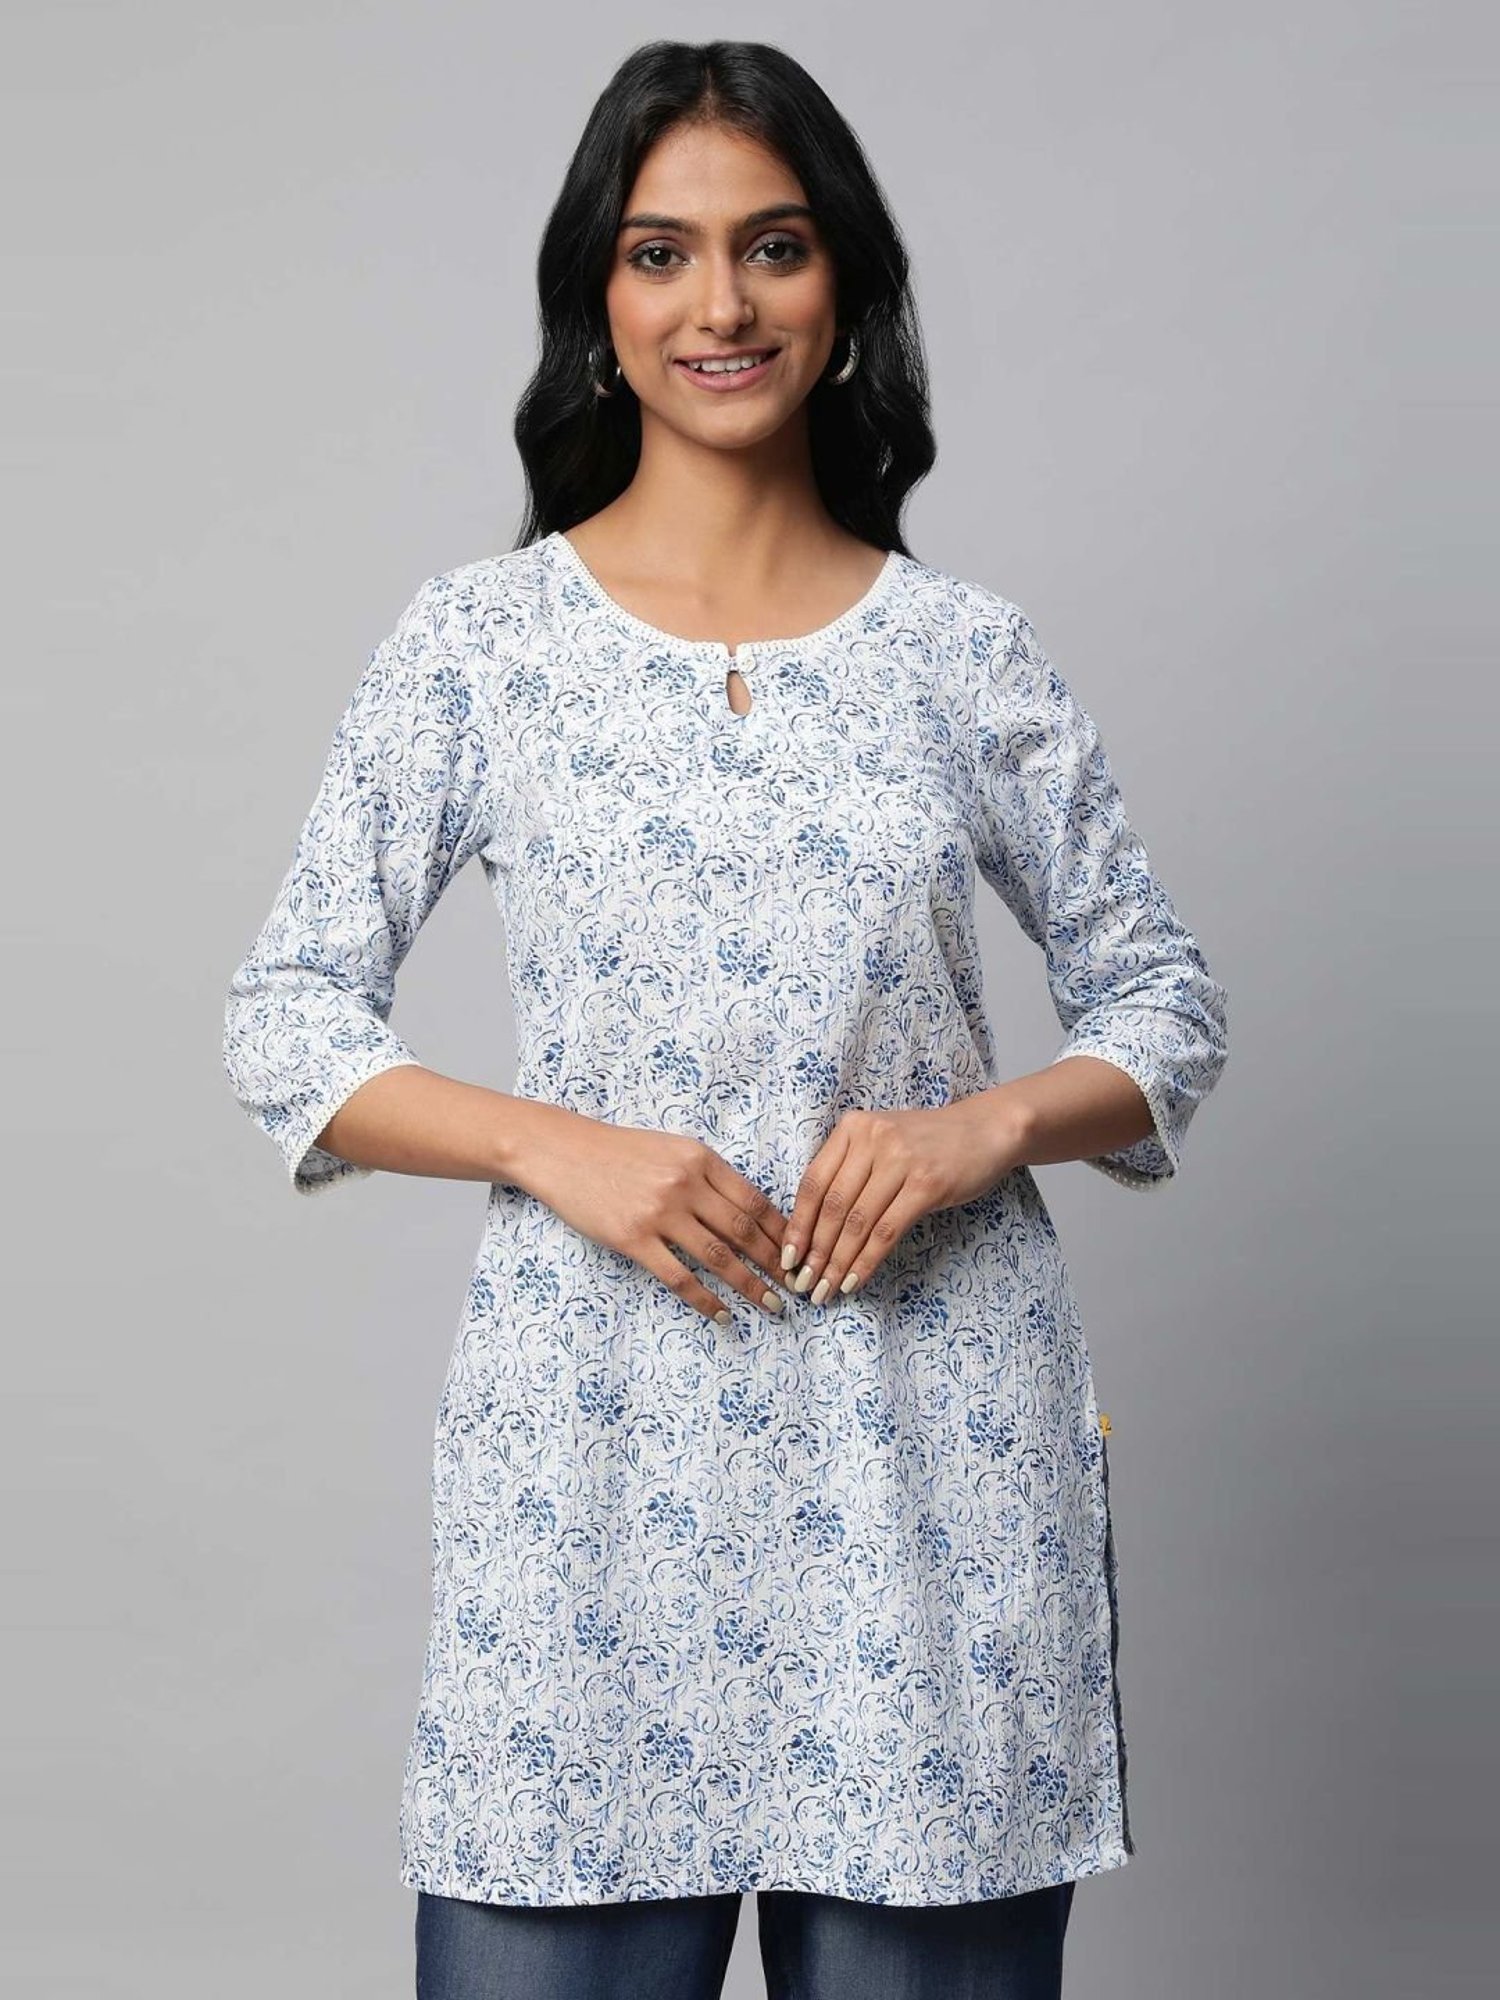 PURPURA Embroidered Full Sleeves Cotton Short Kurti (White-Black) :  Amazon.in: Fashion